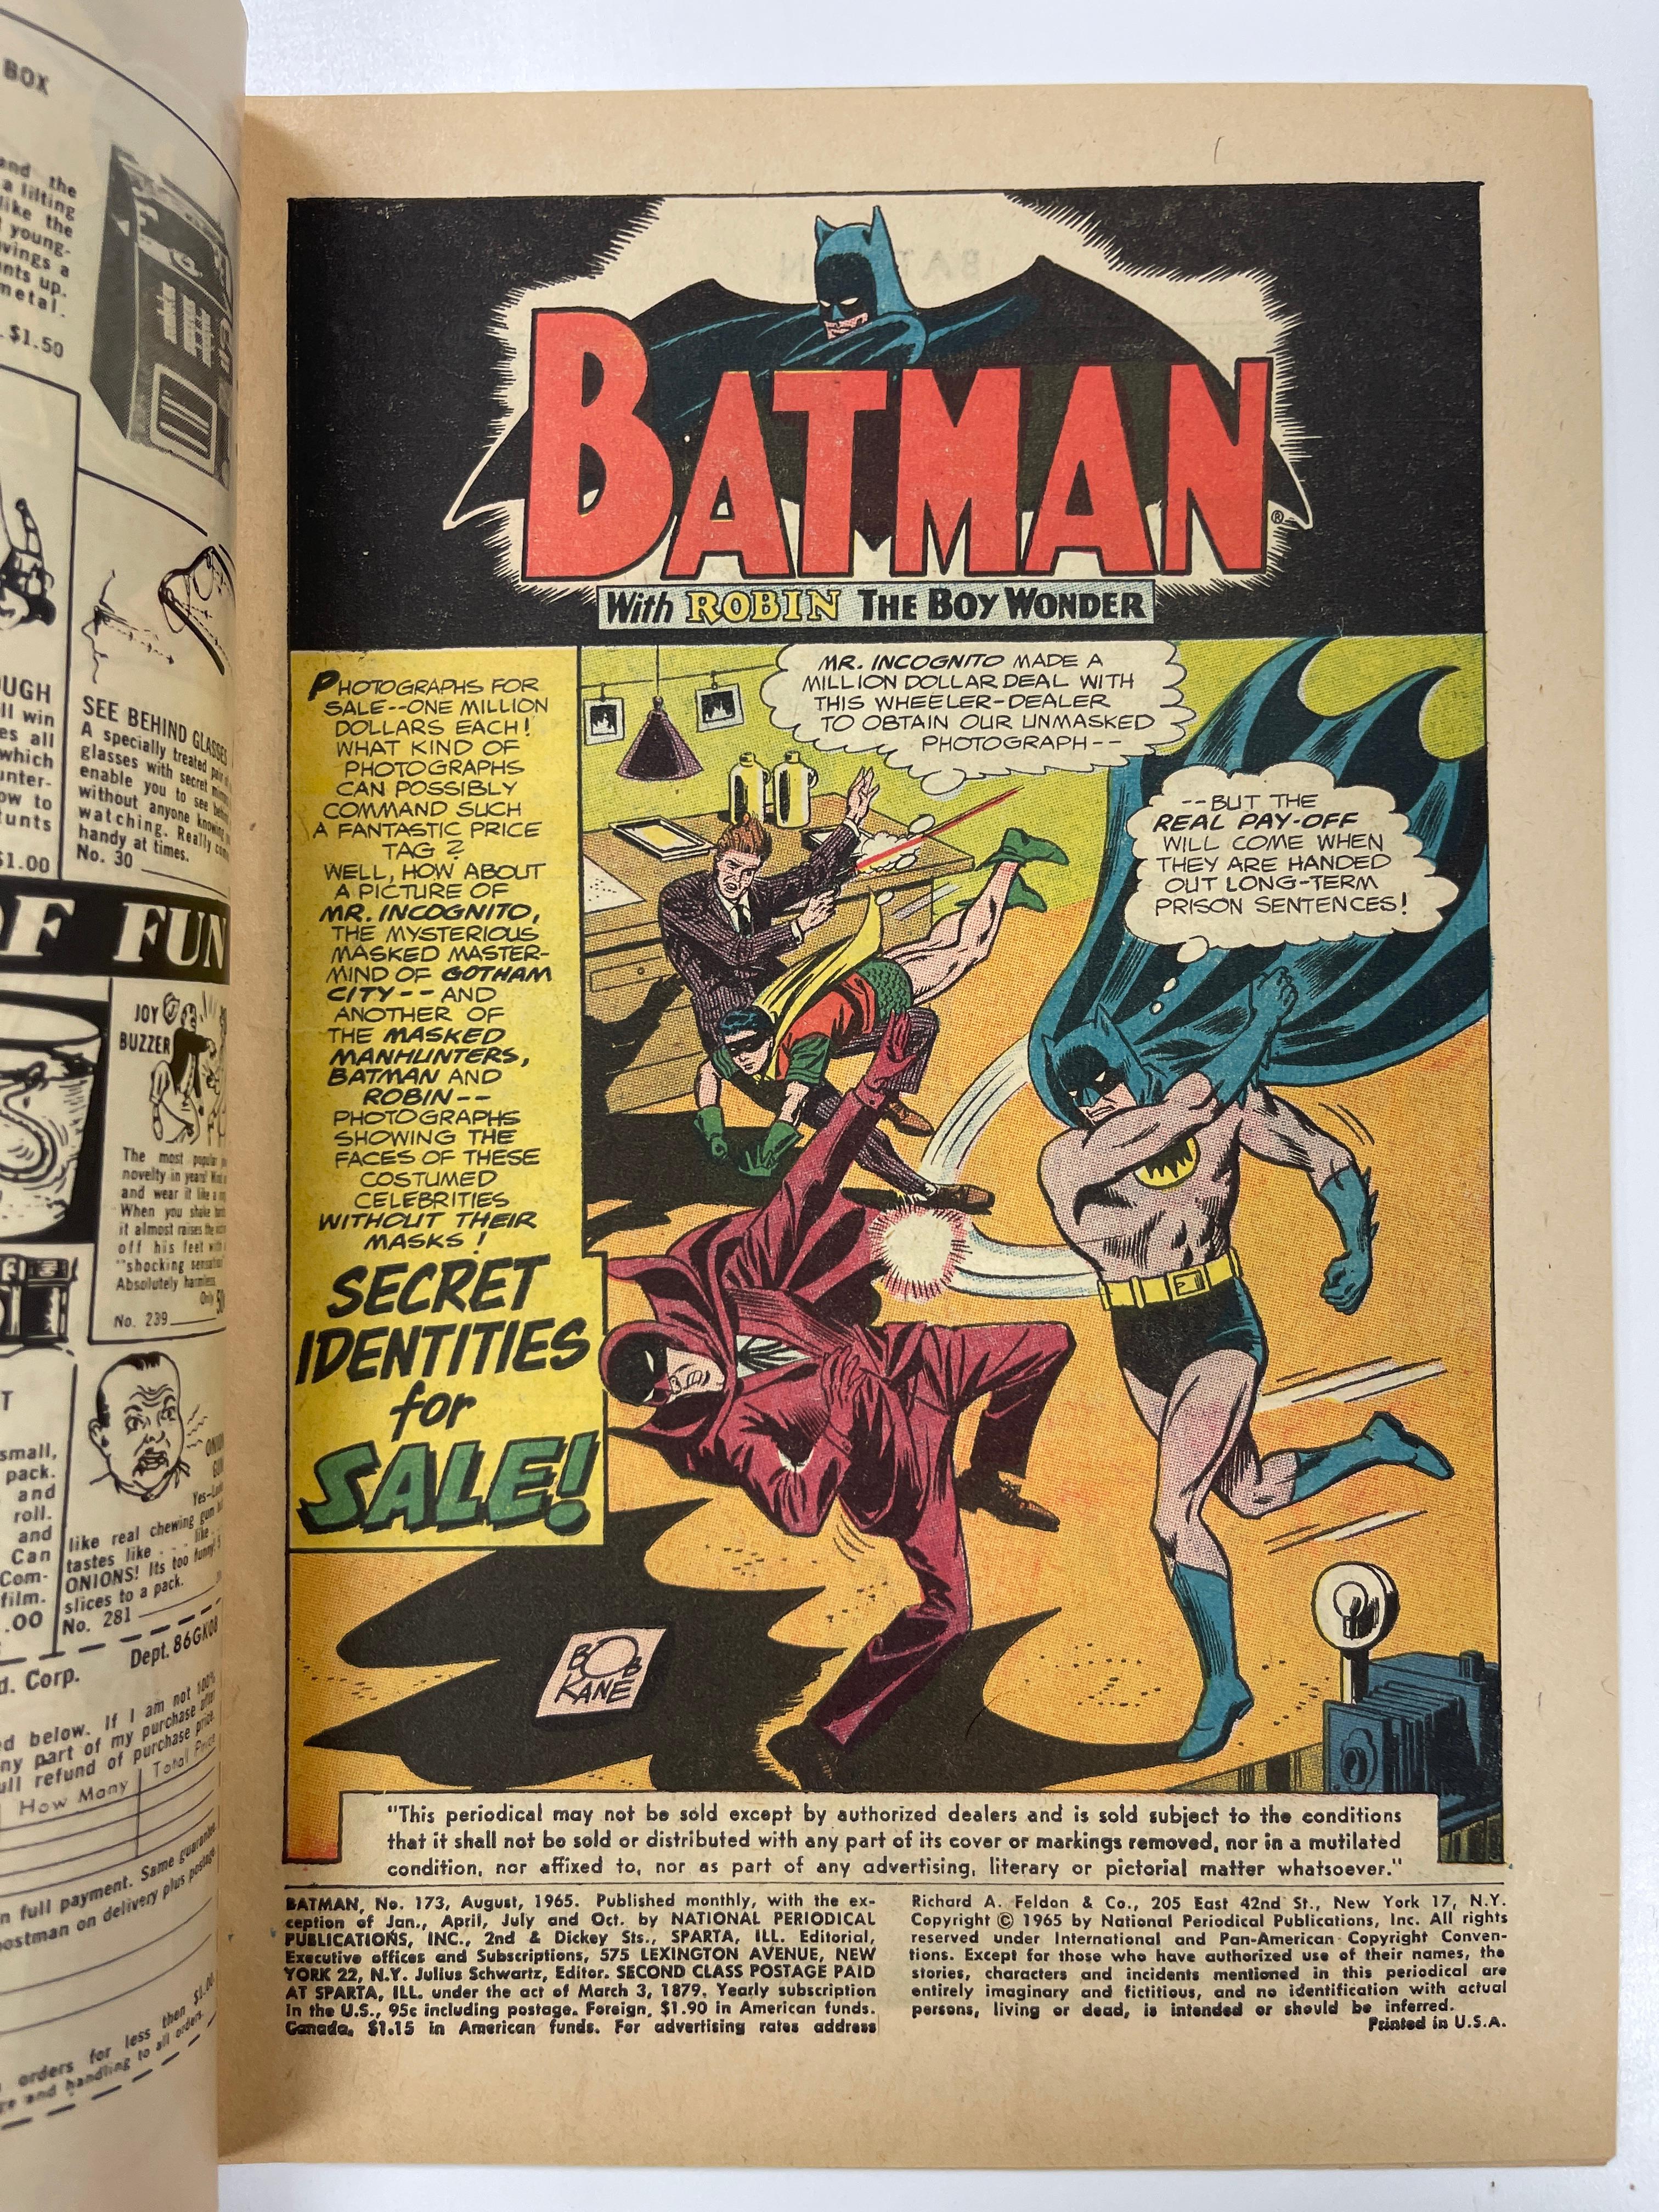 Batman #173  DC Comics, Aug. 1965, Very Nice Comic Book  WOW !!!